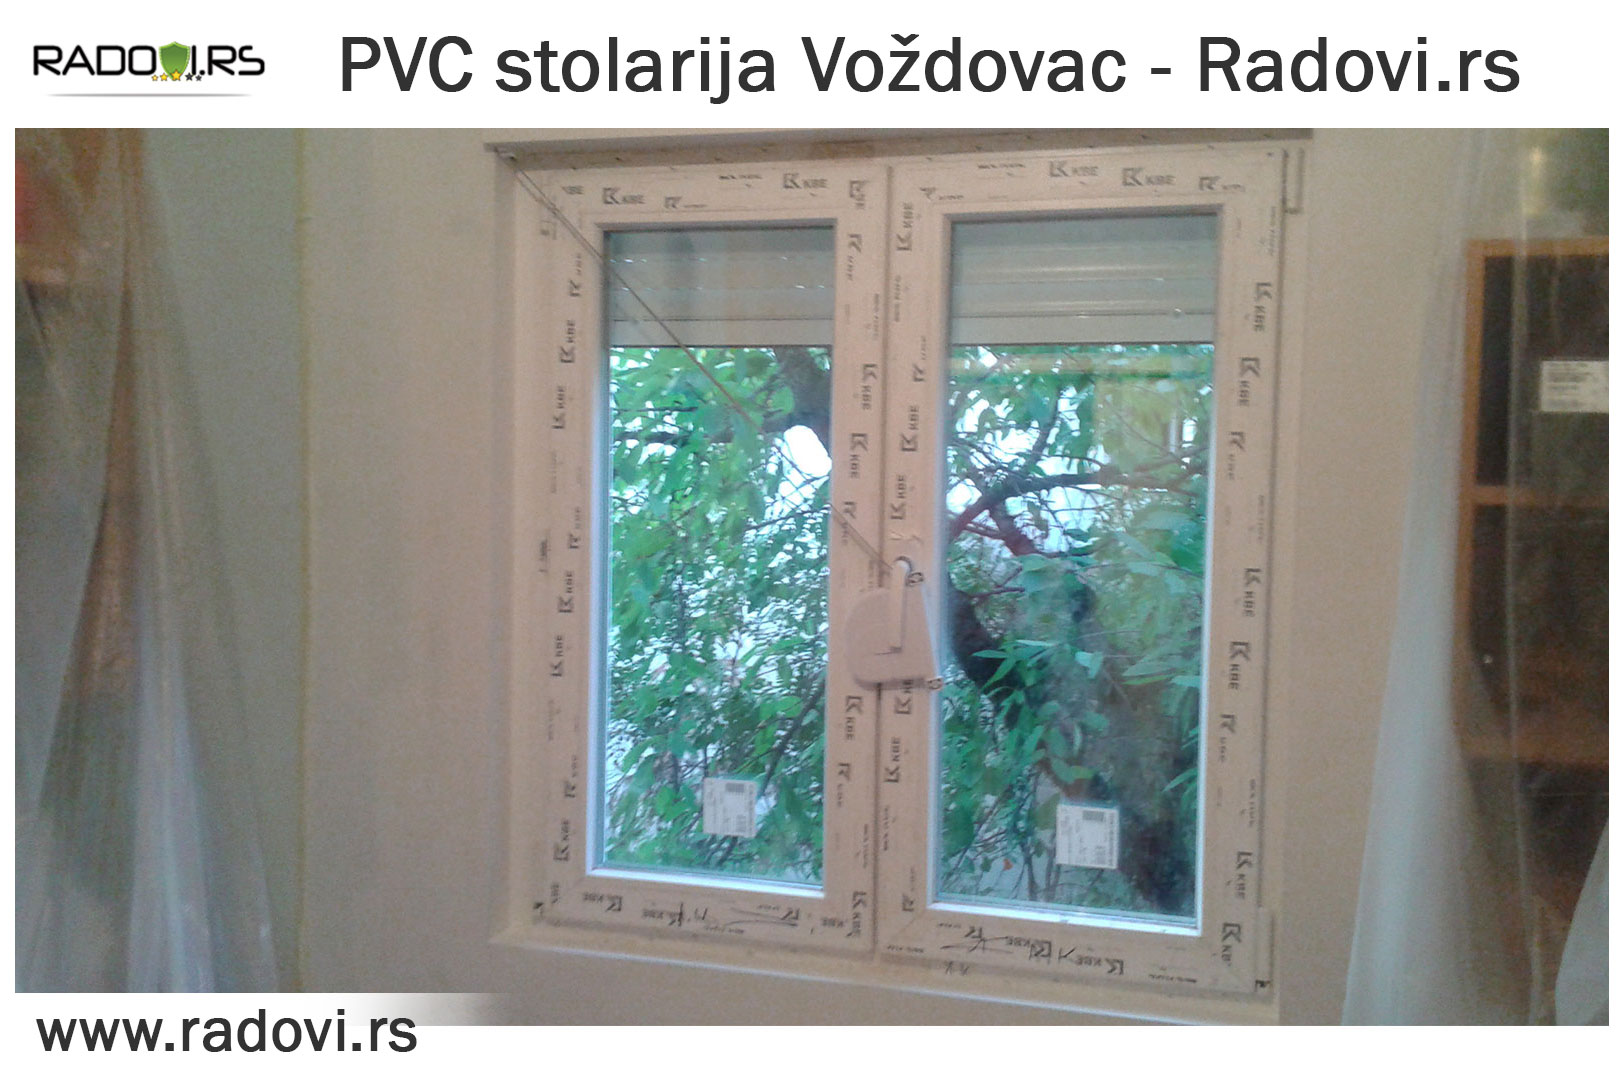 PVC stolarija Voždovac - PVC Stolarija Tim - Radovi.rs